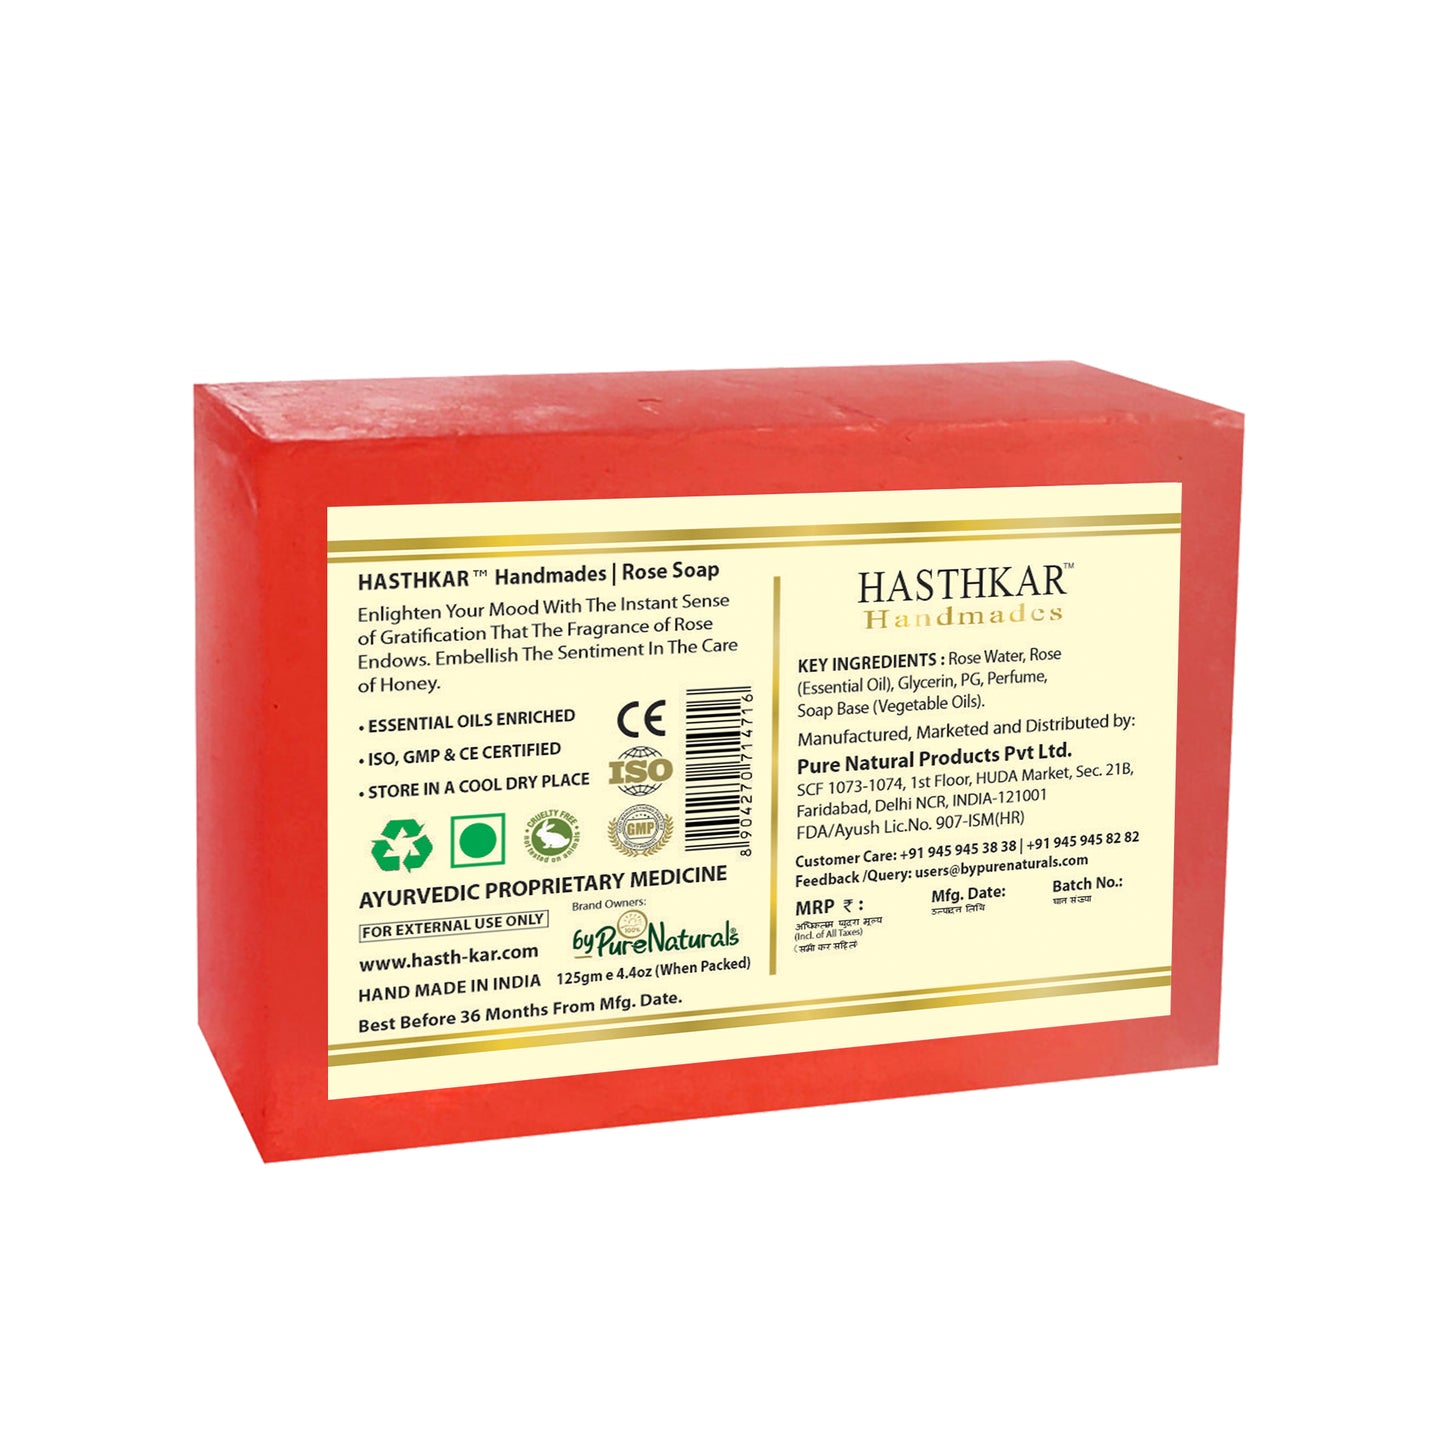 Hasthkar Handmades Glycerine Rose Soap 125gm Pack of 5